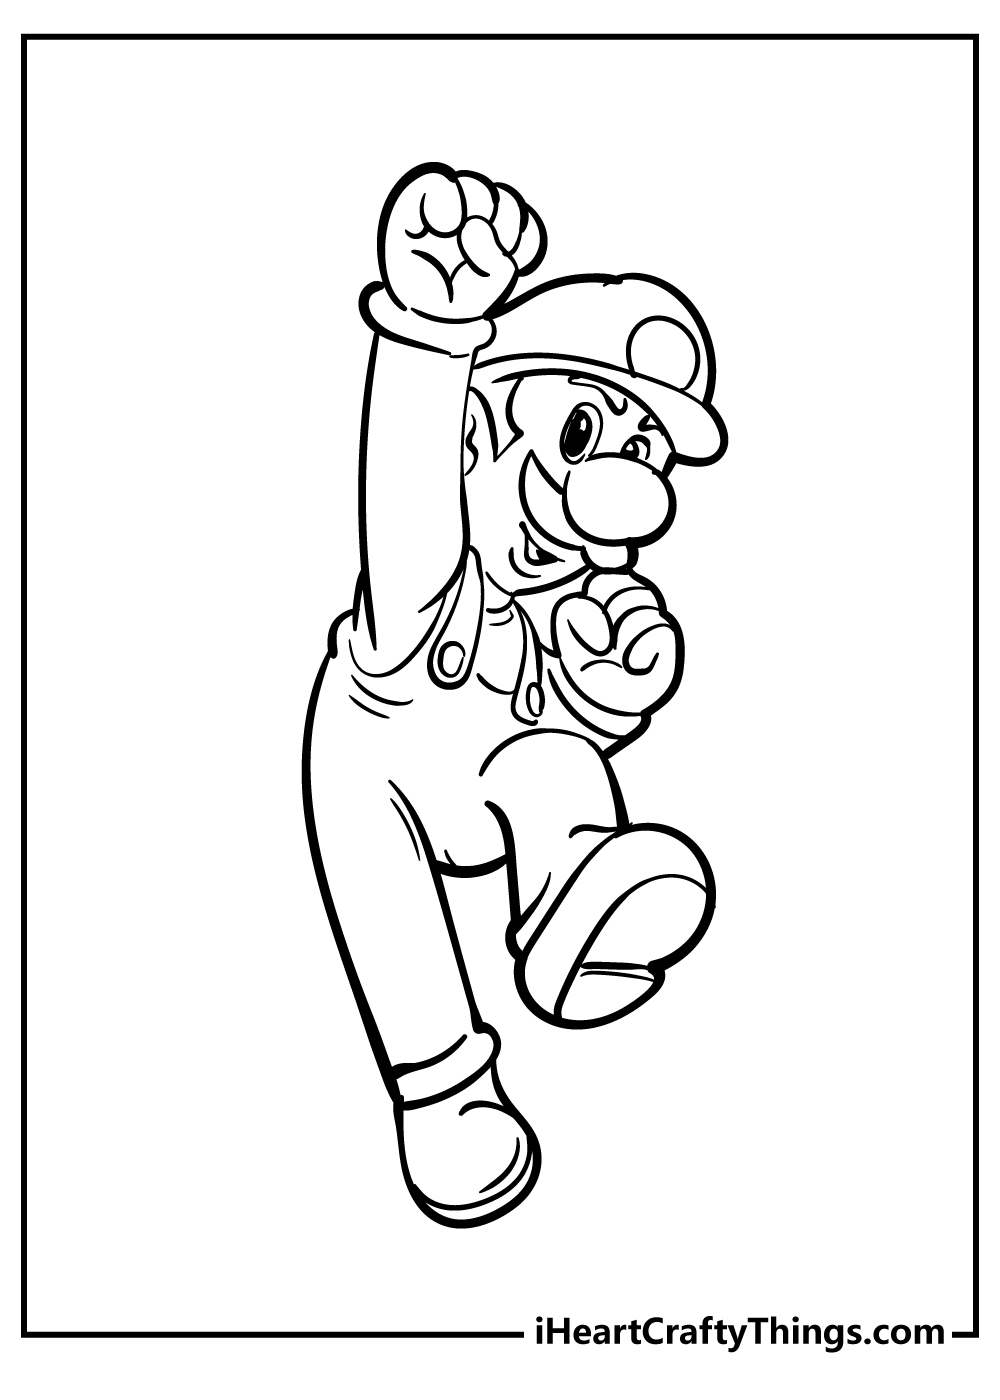 Super Mario Bros coloring pages free printable